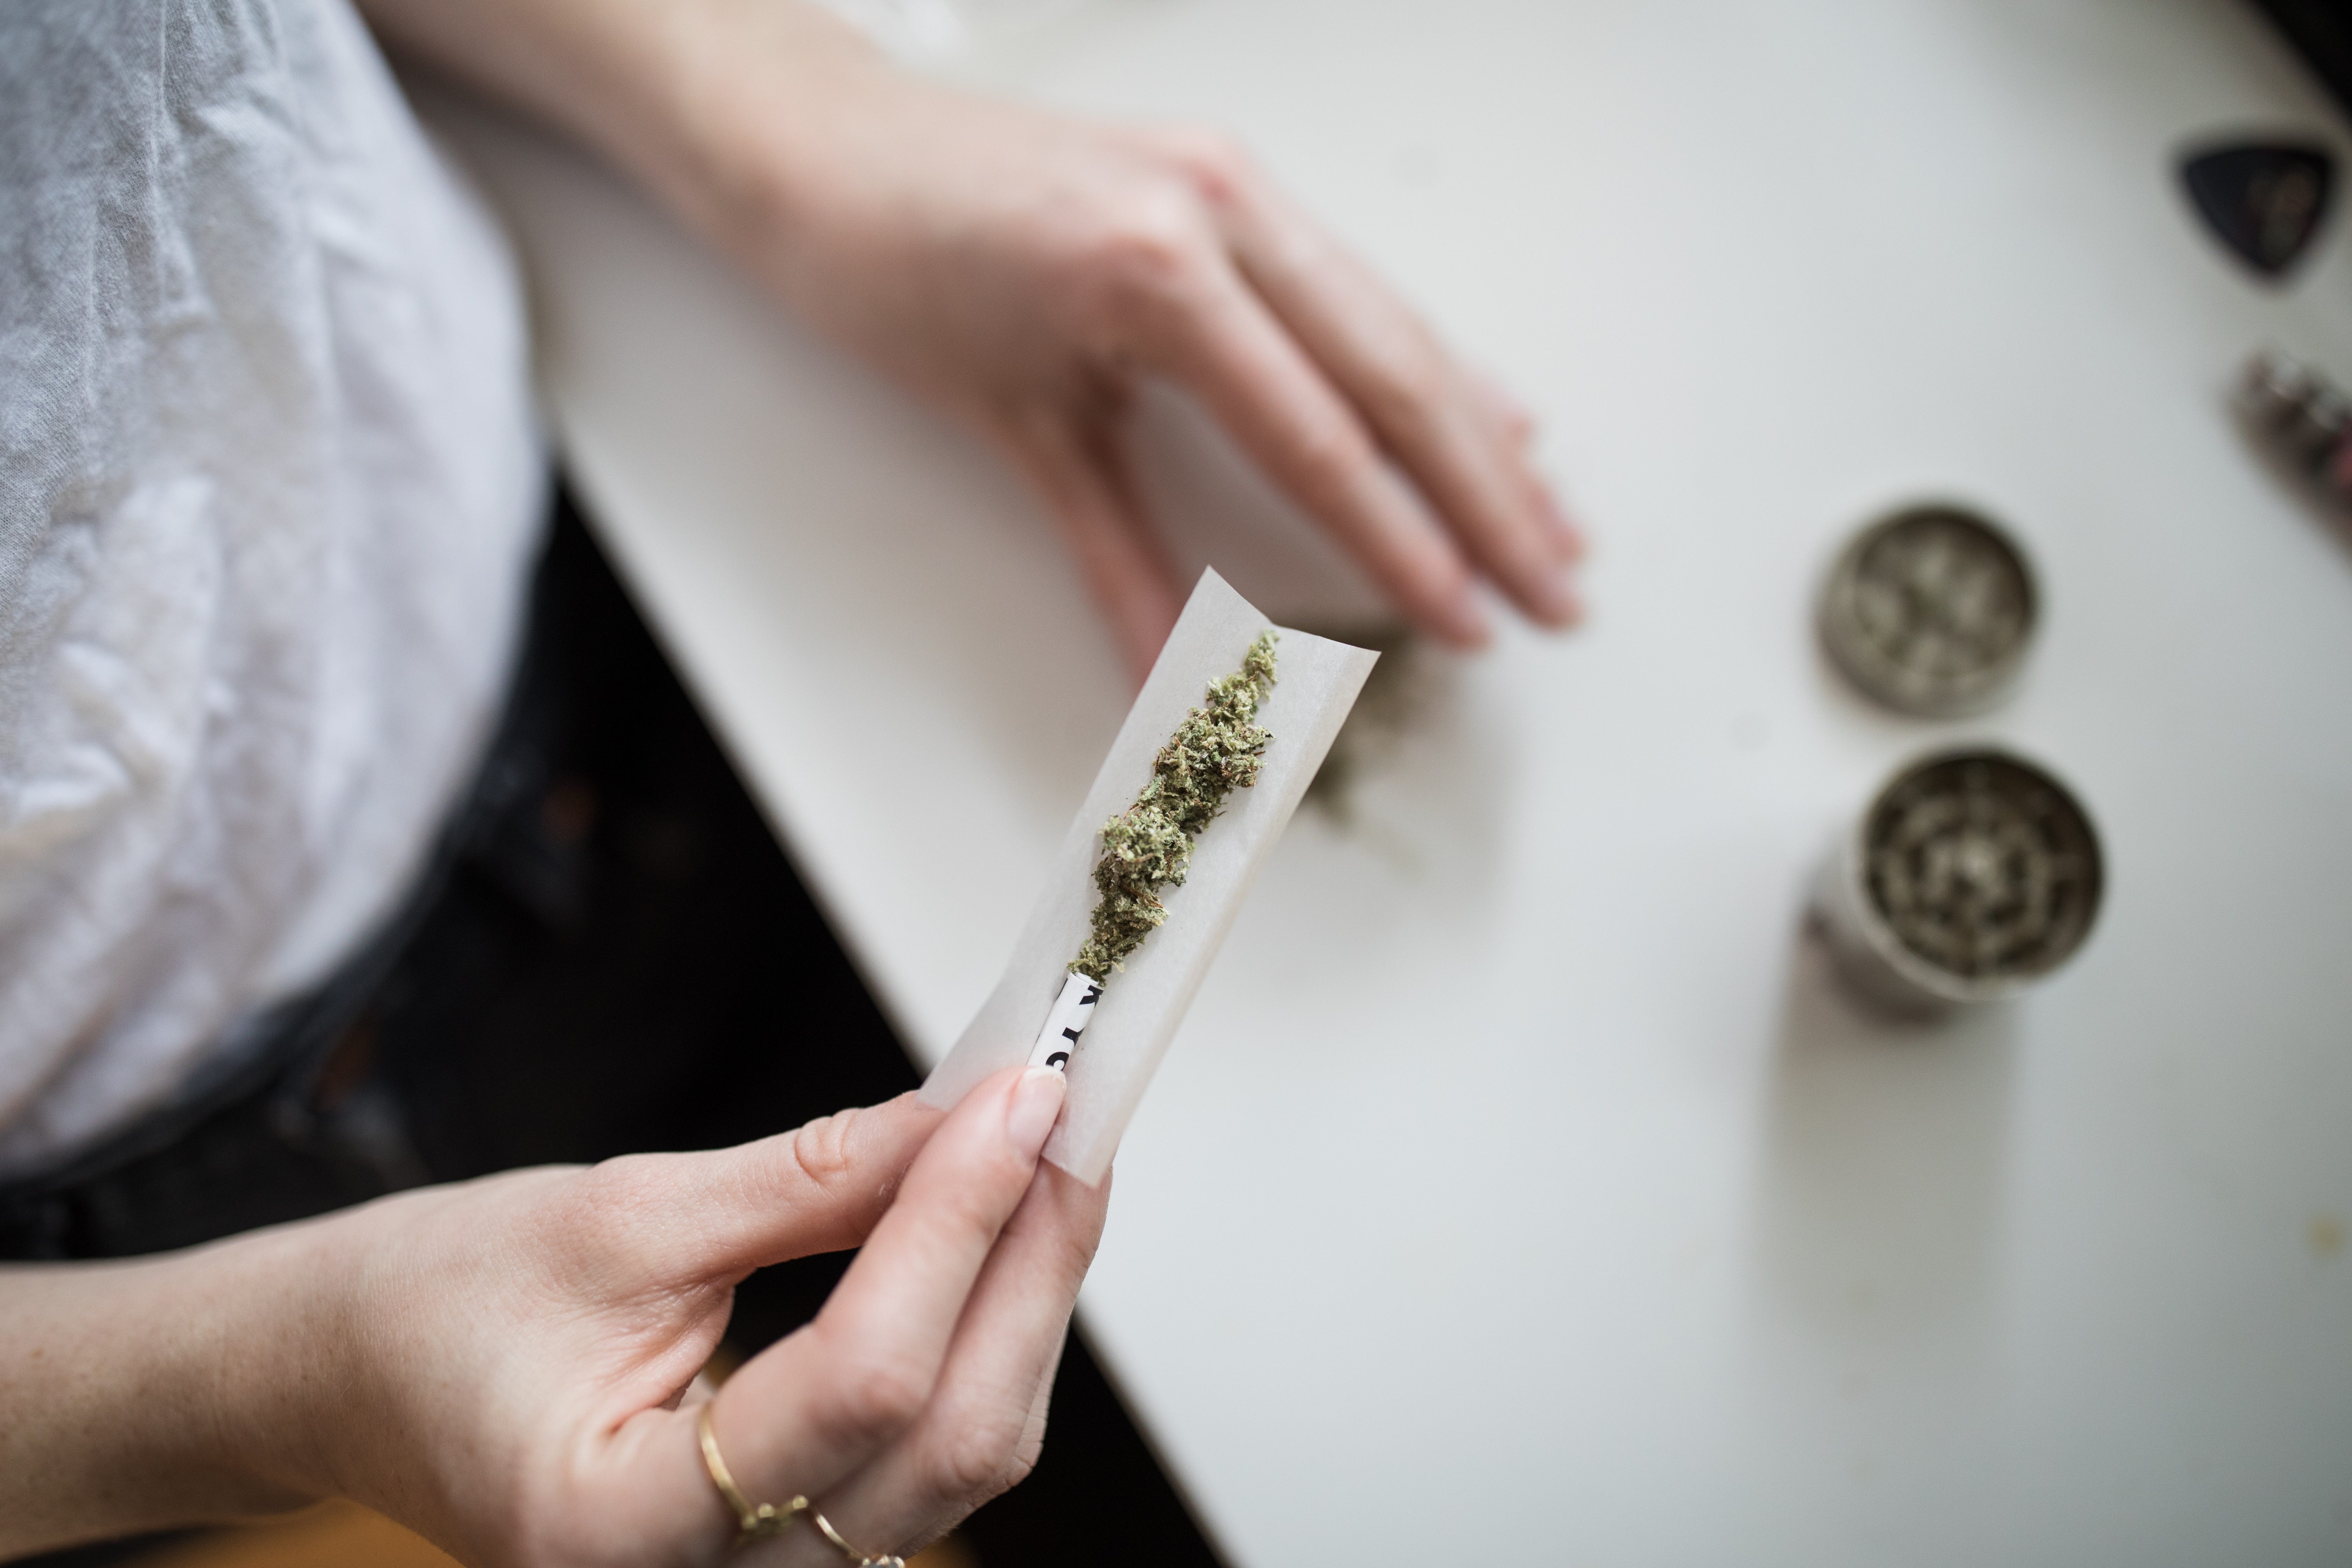 New Study: Adult-Use Cannabis Availability Reduces Opioid Deaths